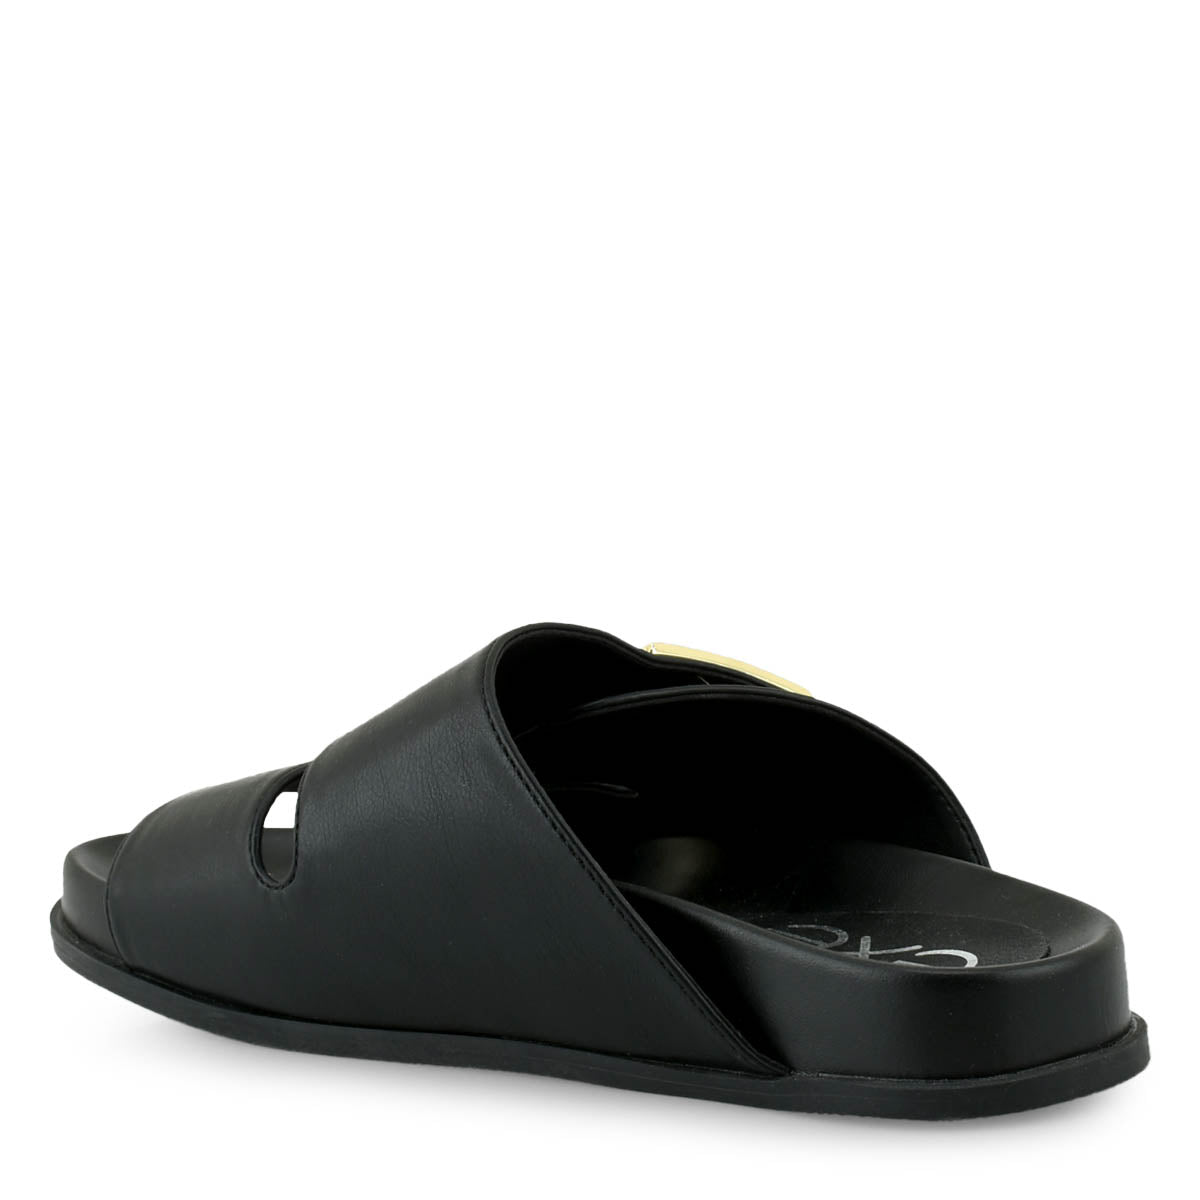 EXE 5207-4330 Sandals